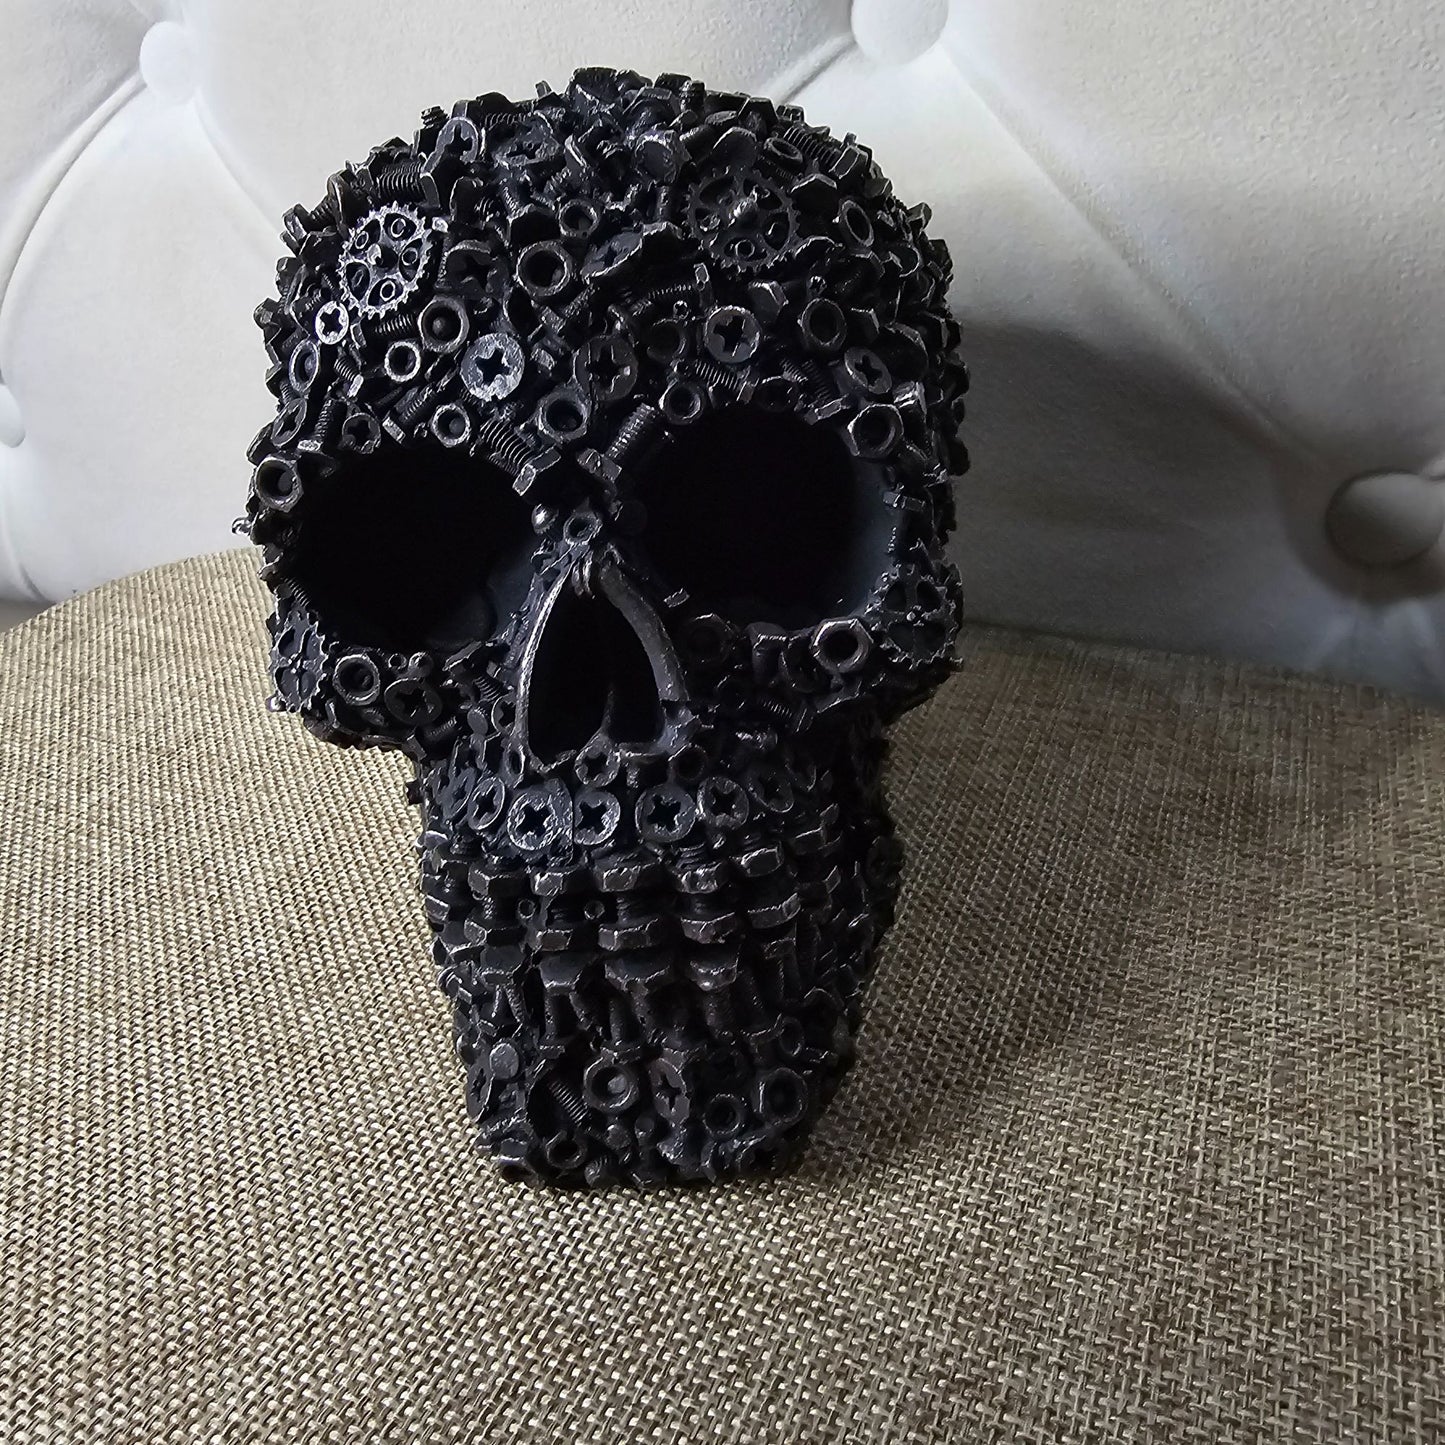 Metal 𝐿𝑜𝑜𝑘 Hardware Skull Sculpture - Unique Steampunk Decor Piece